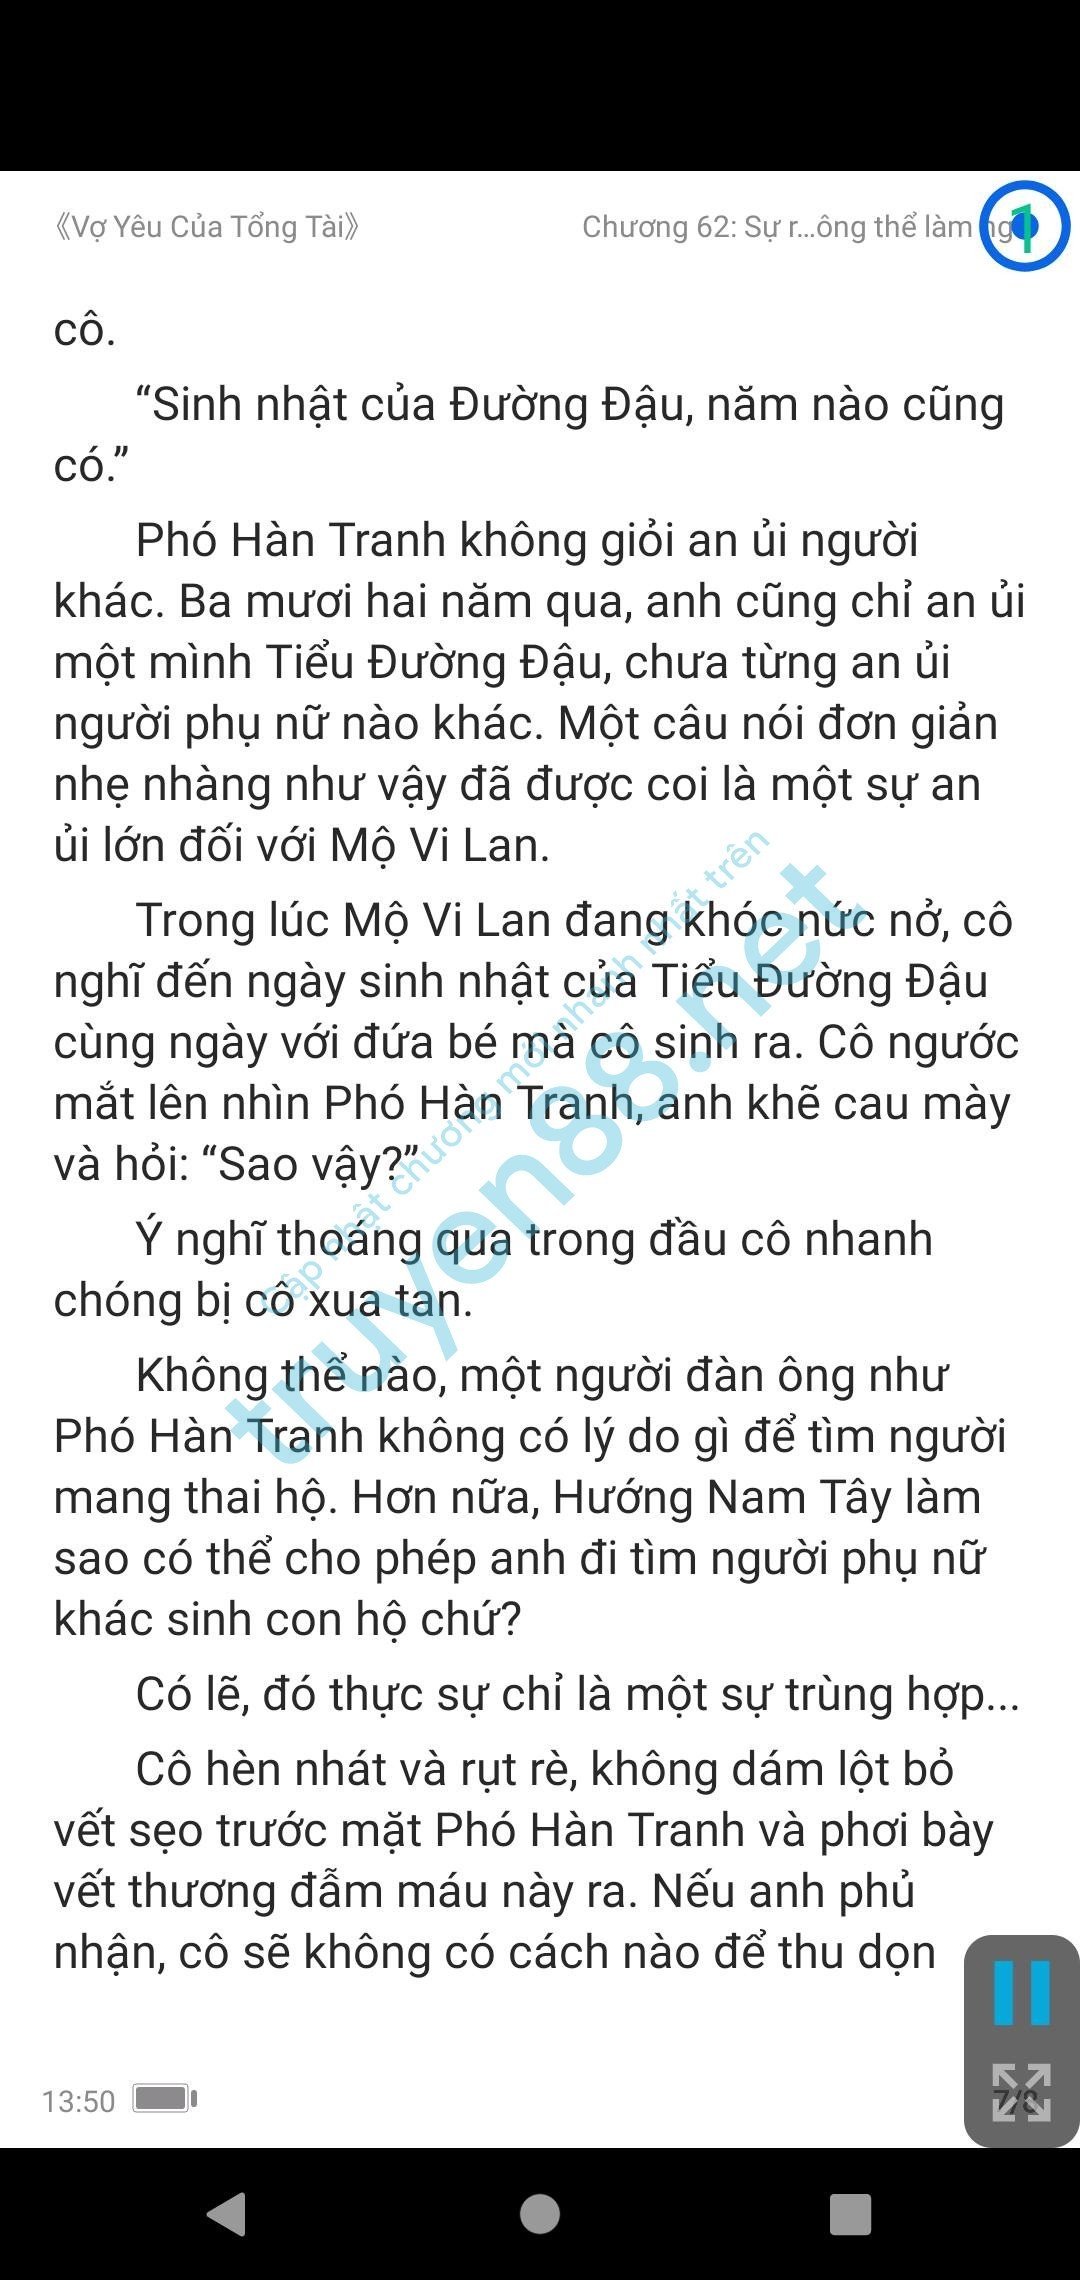 vo-yeu-cua-tong-tai-mo-vi-lan--pho-han-tranh-62-1